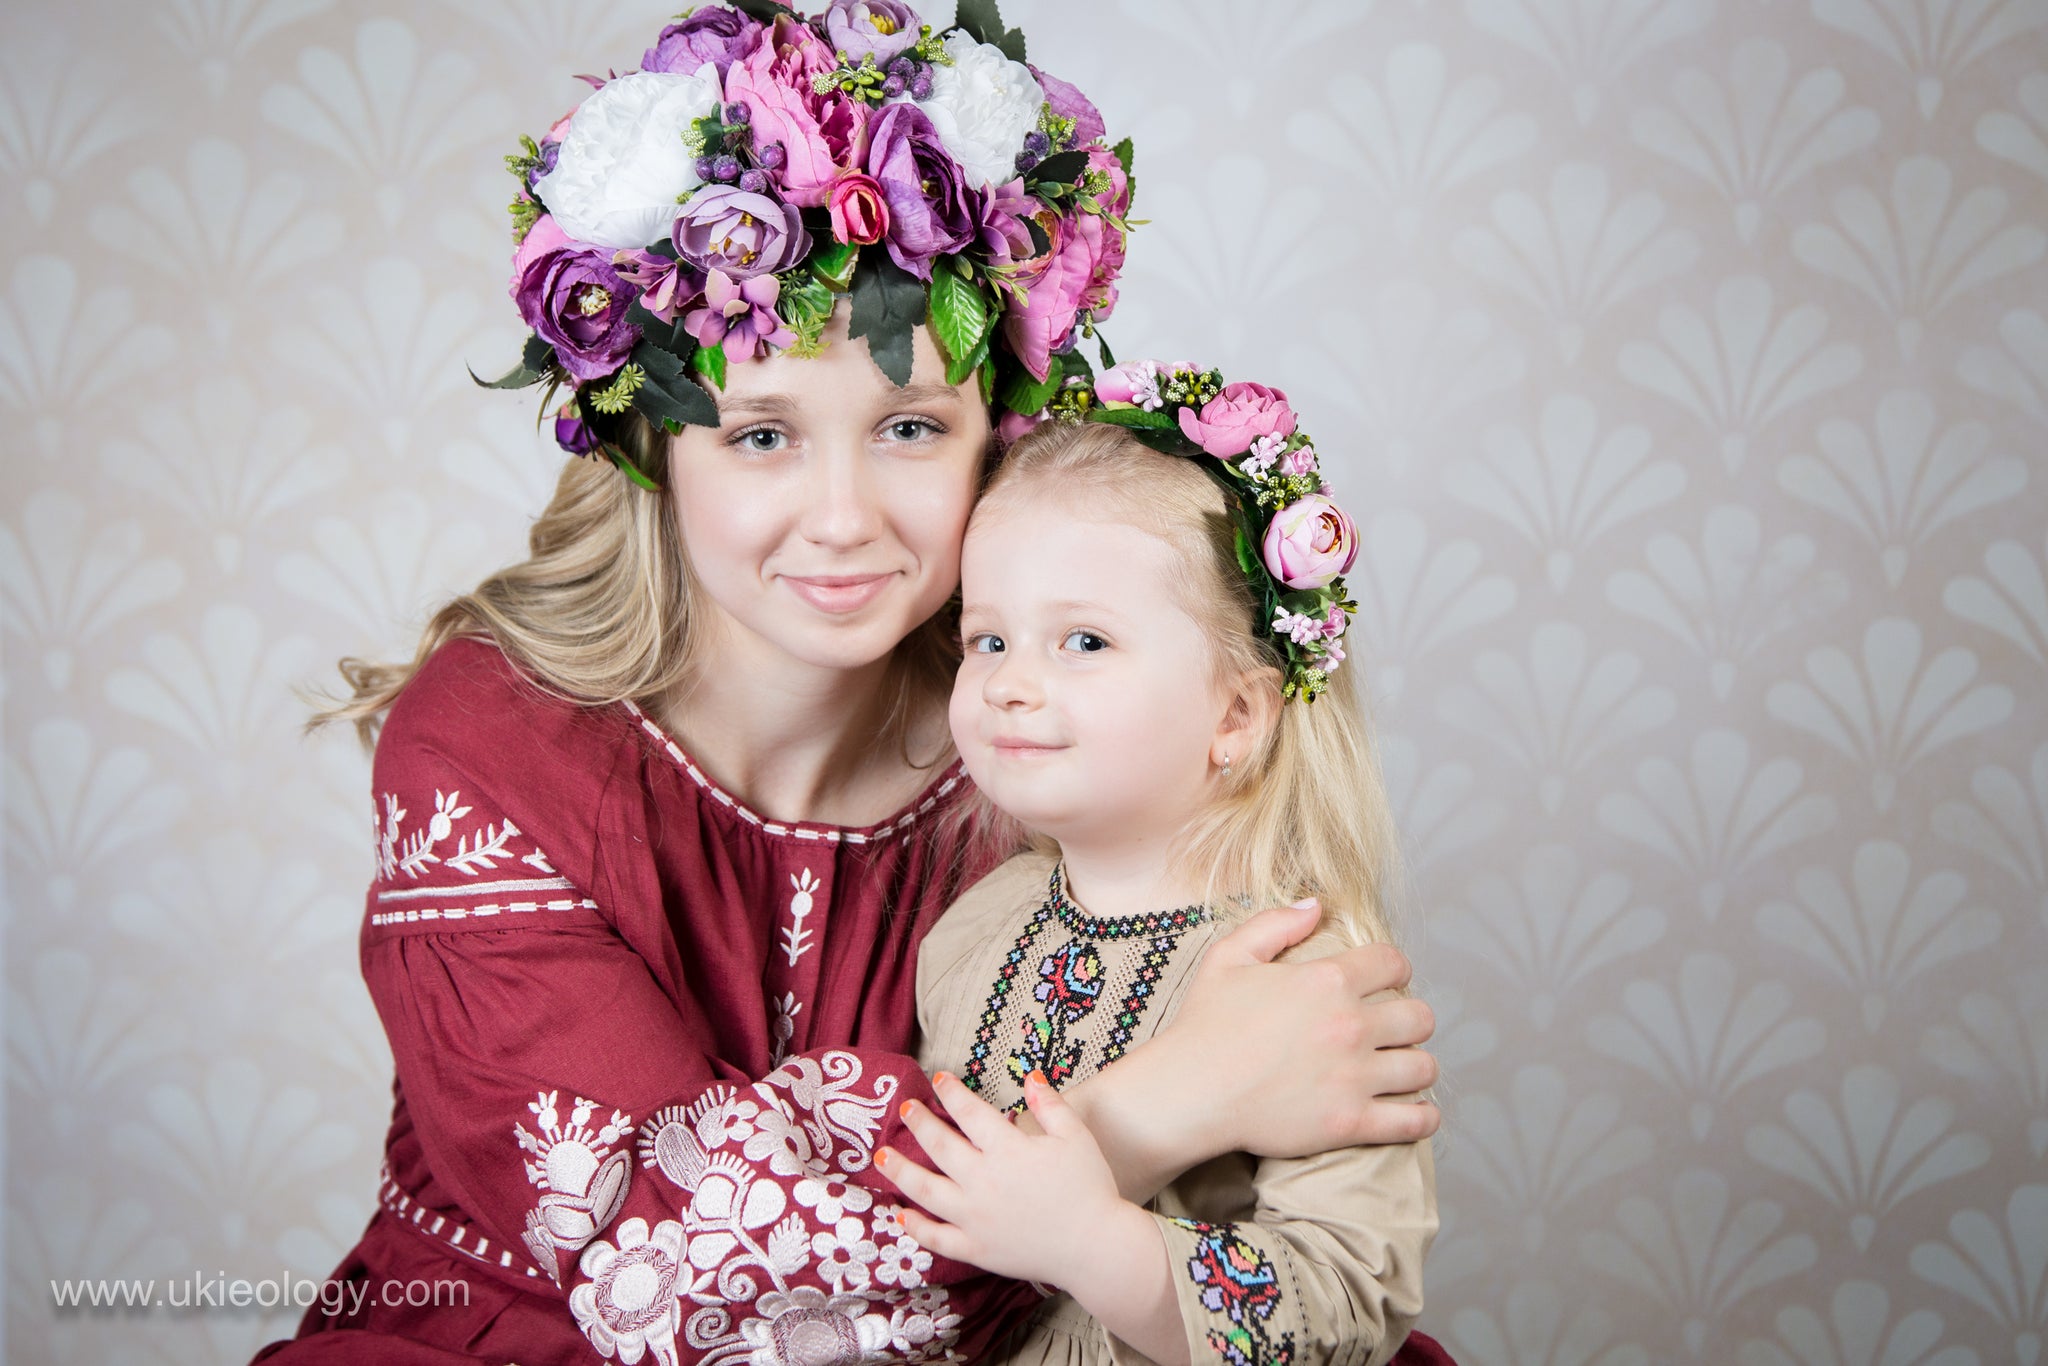 Ukrainian Vinok - when beauty and tradition intertwine